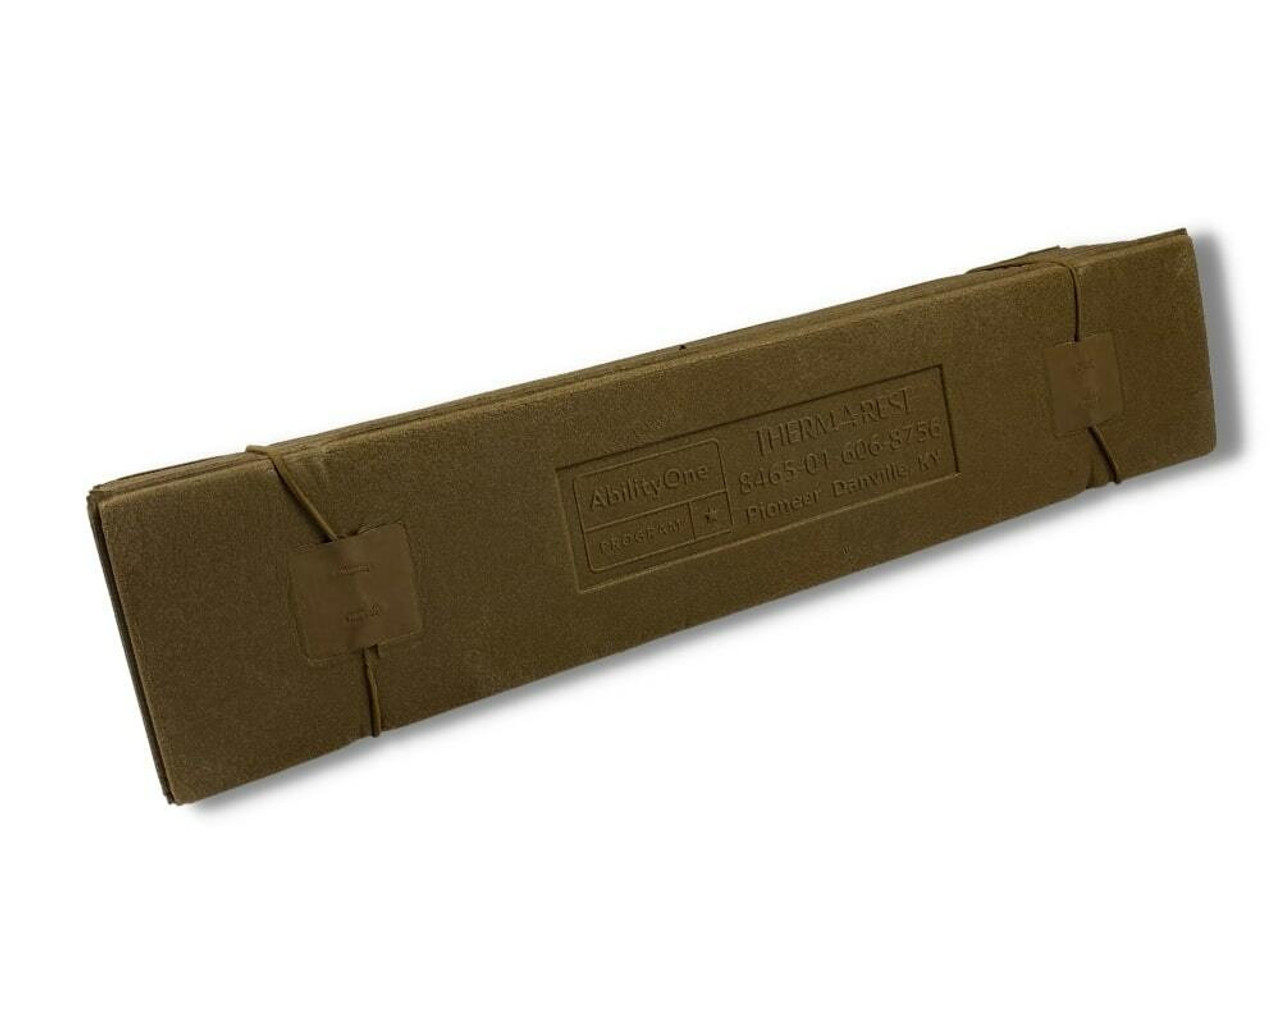 USMC Issue Folding Sleeping Mat, Used